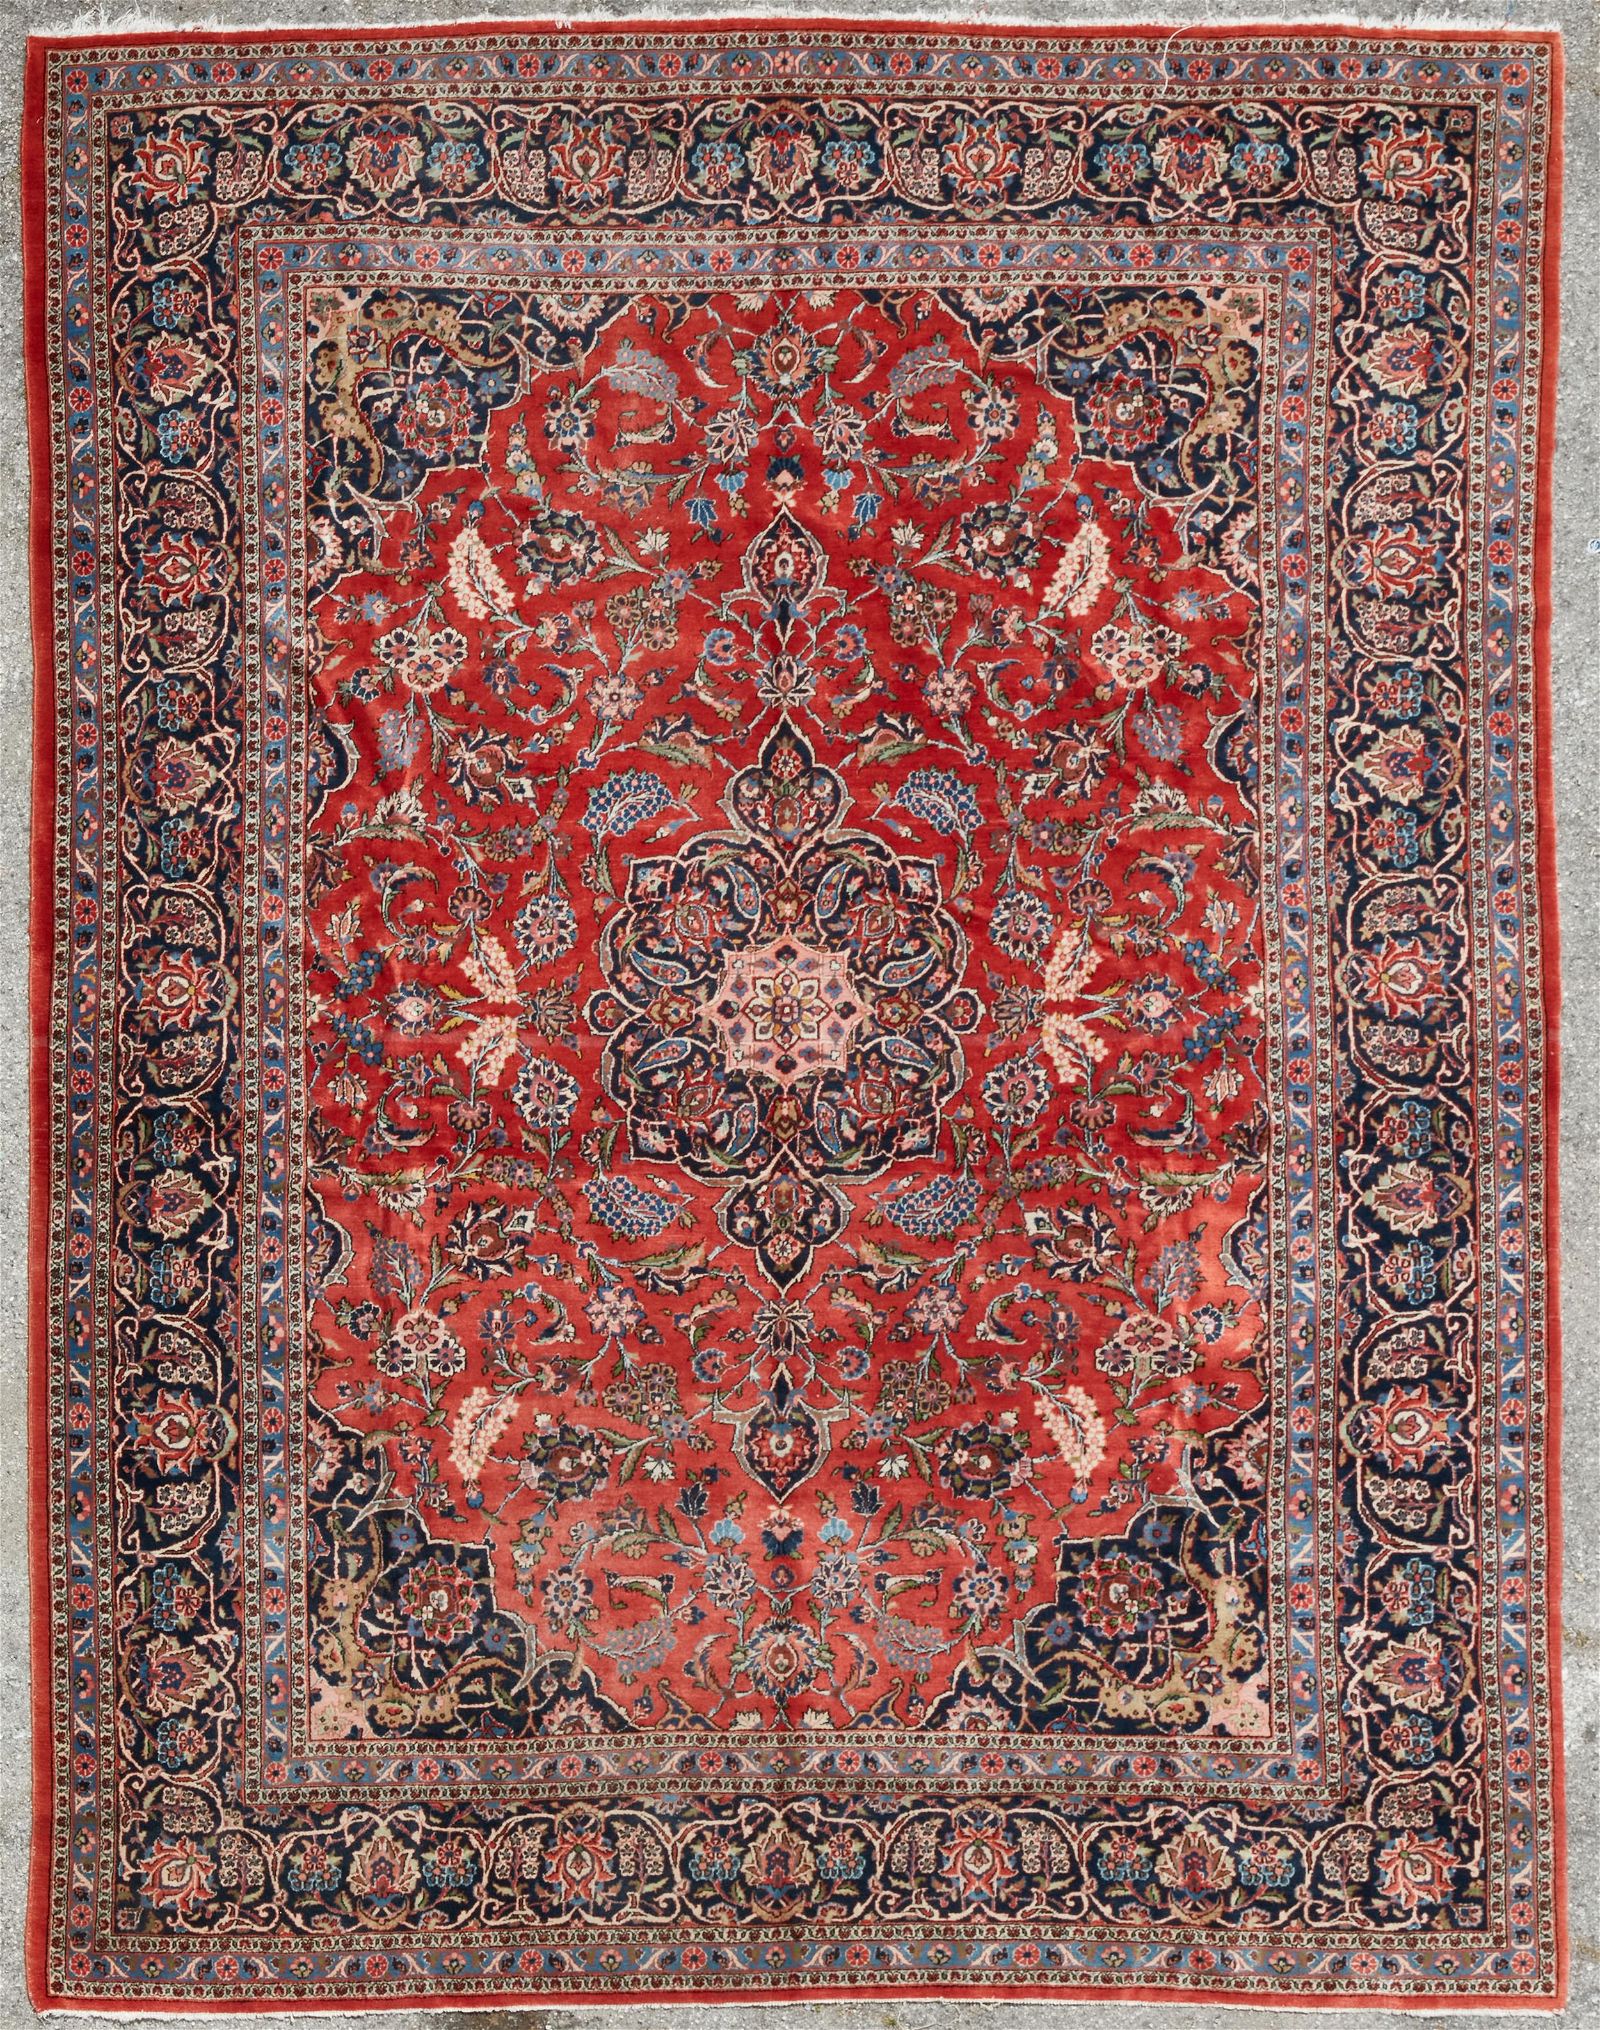 A KASHAN CARPETA Kashan carpetapproximately